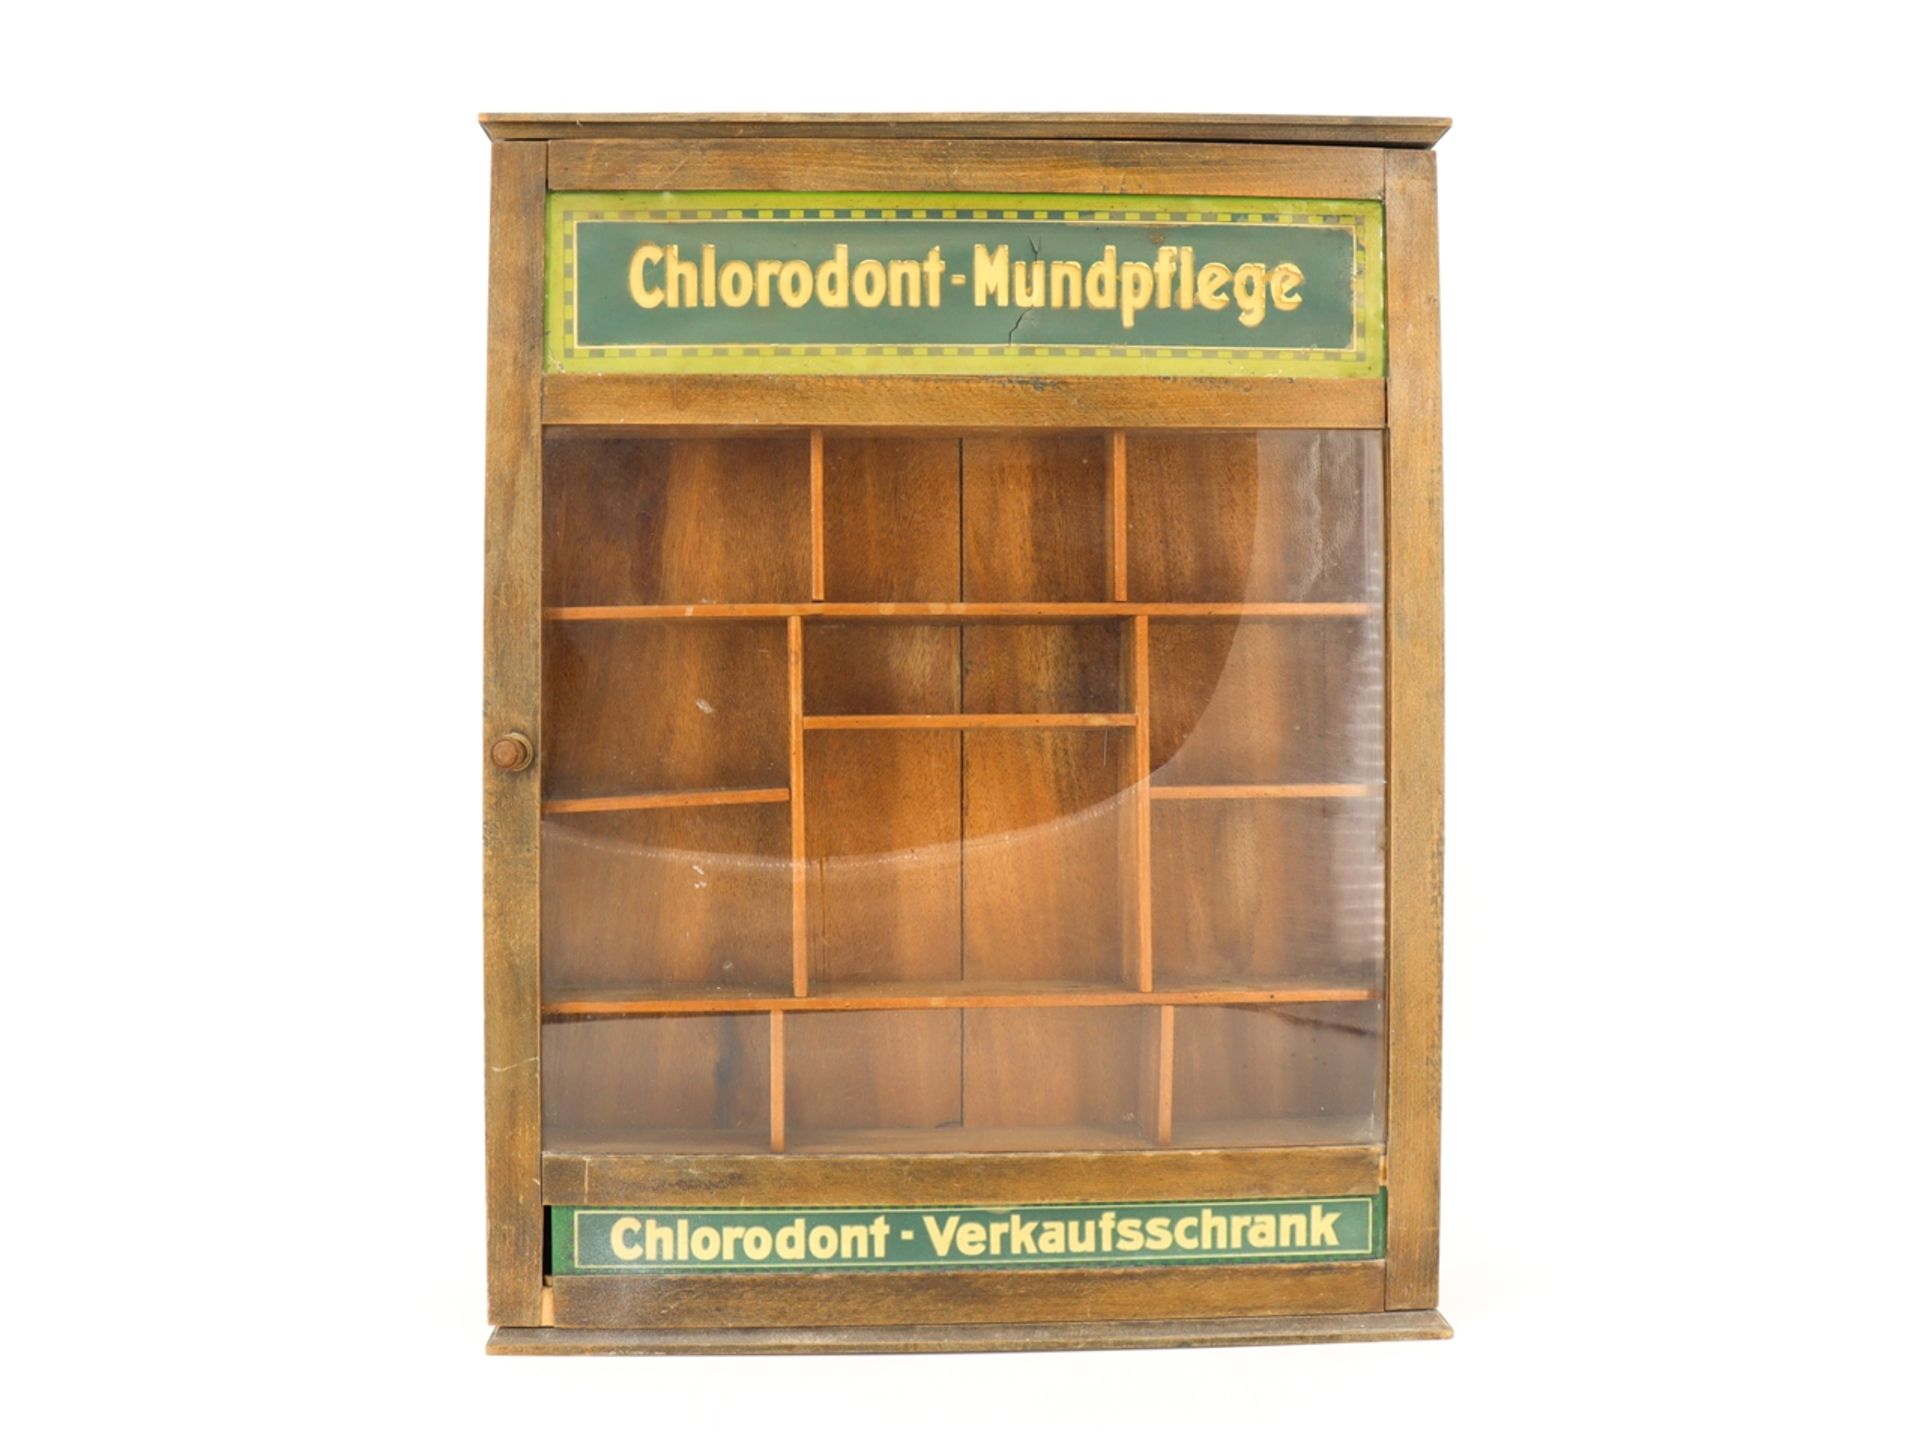 Chlorodont oral care, sales cabinet, Dresden around 1930